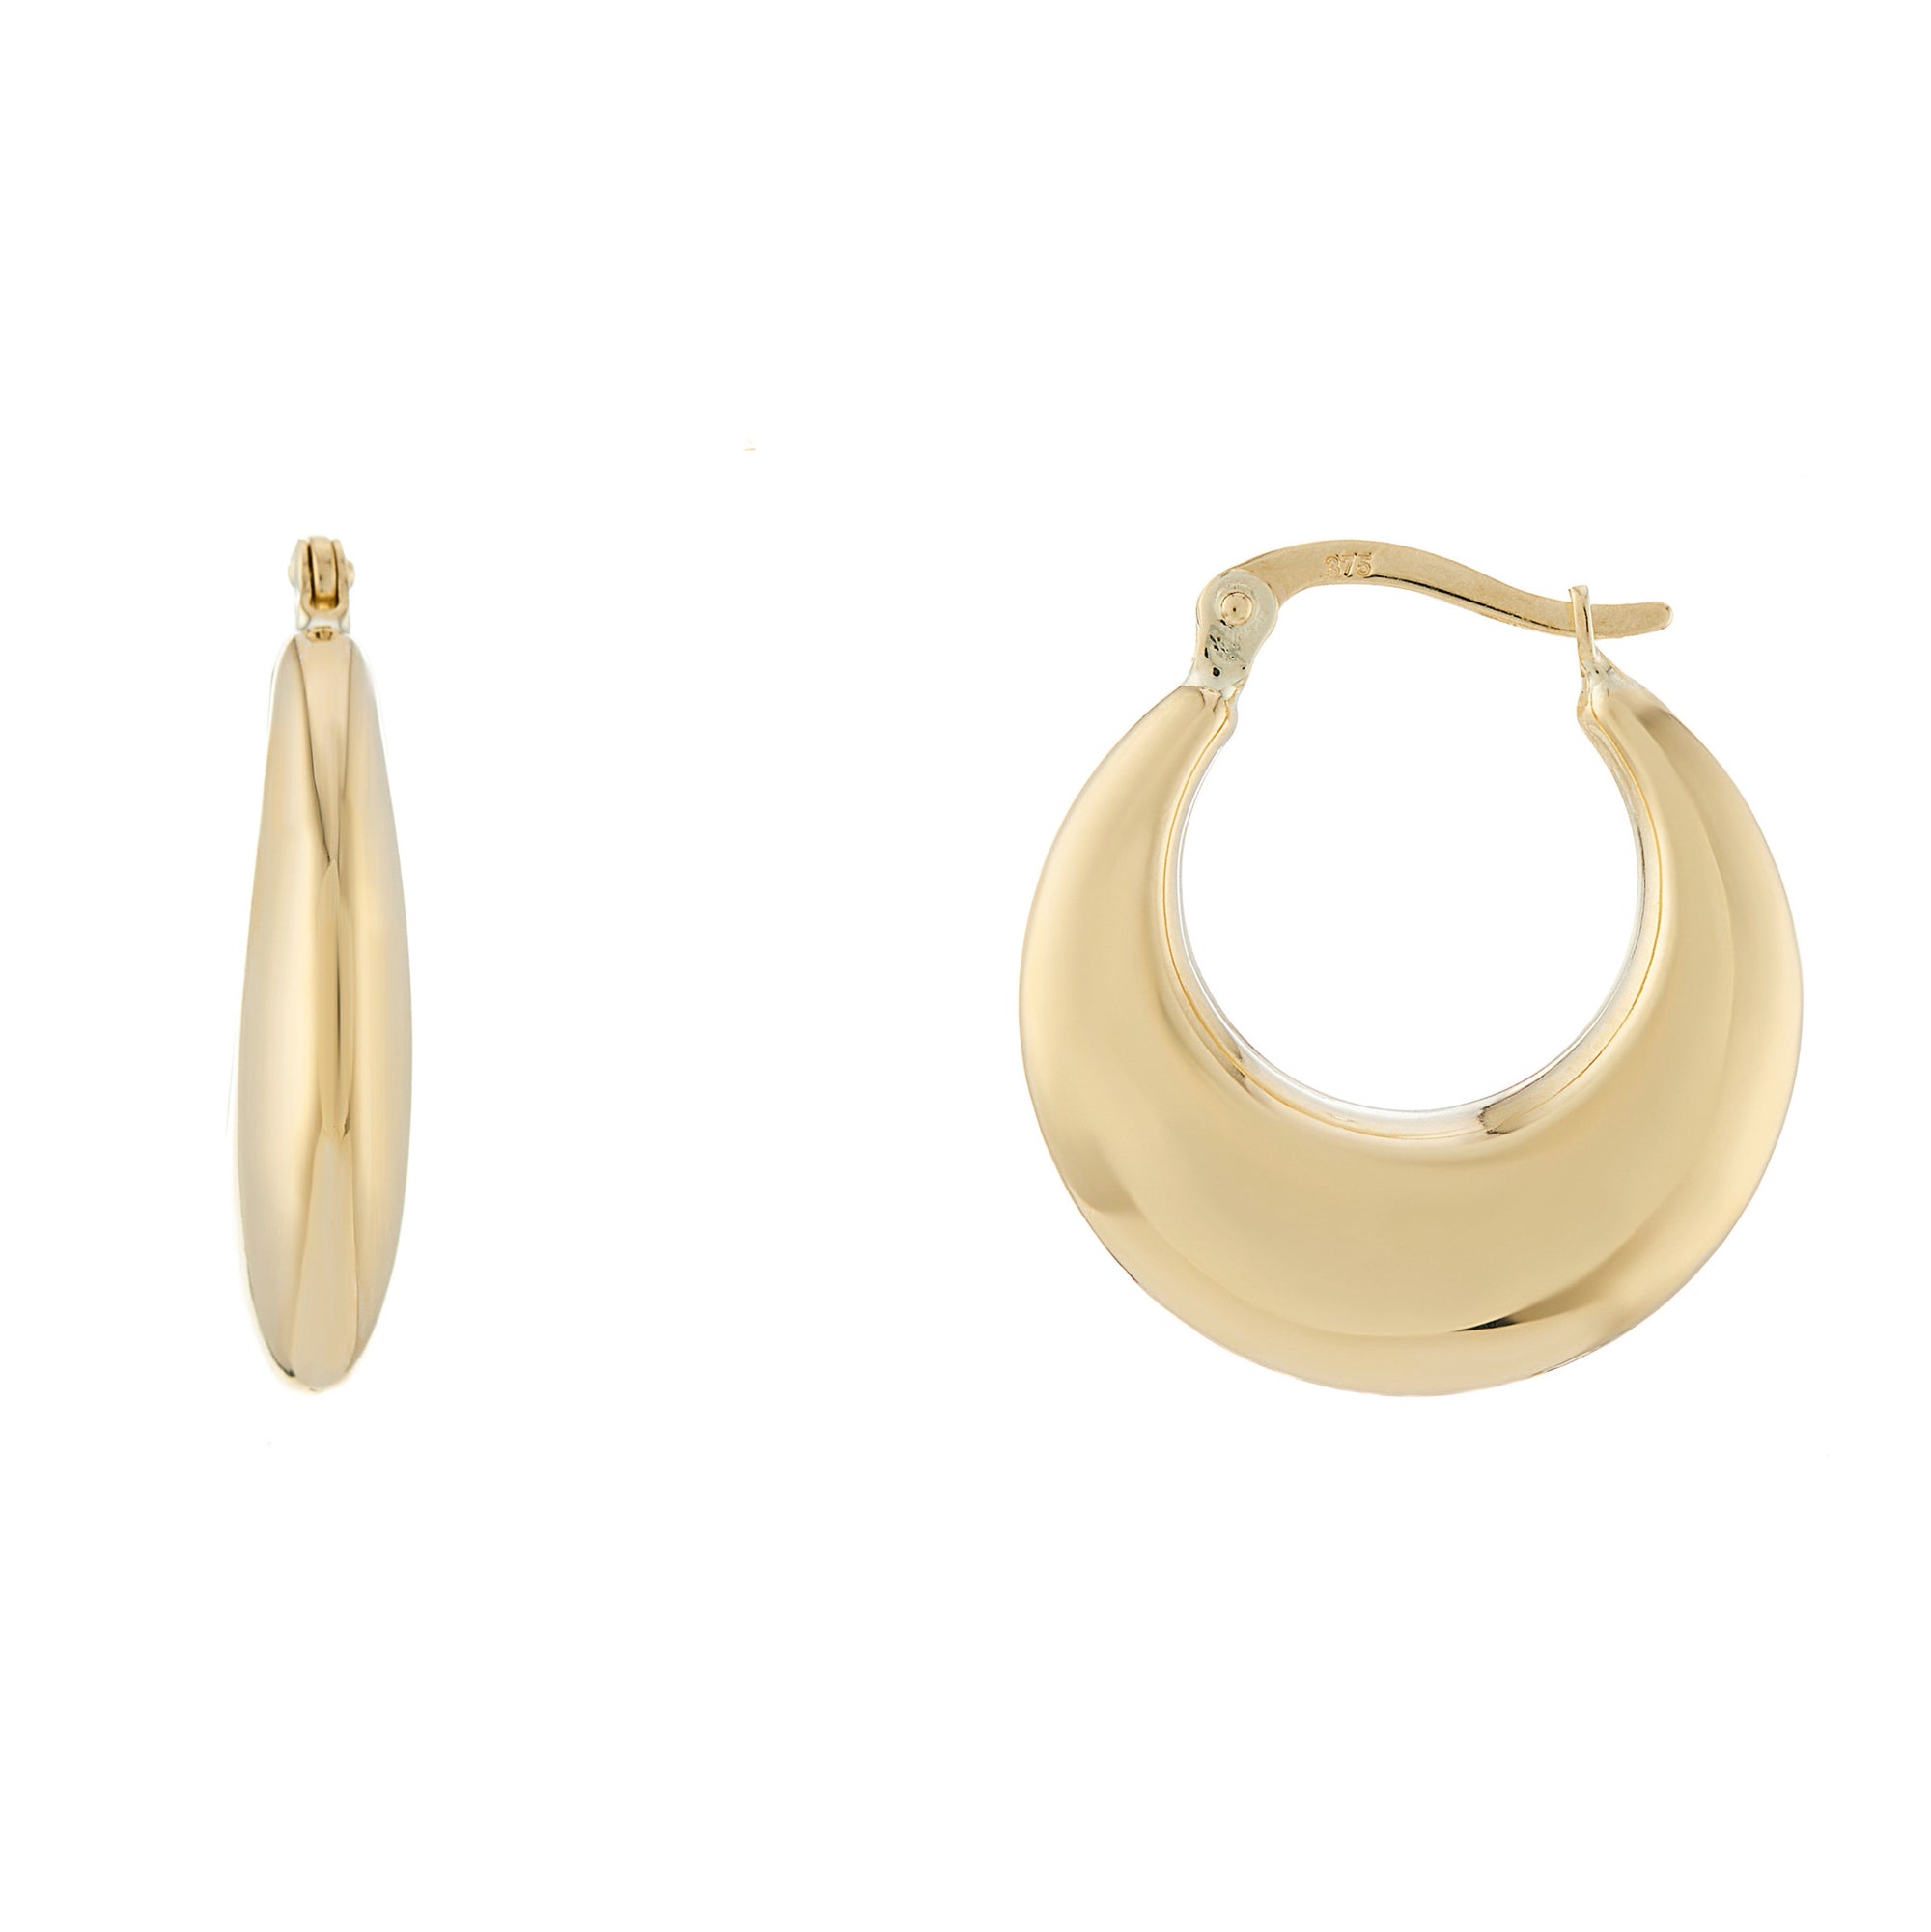 9ct gold plain creole hoop earrings